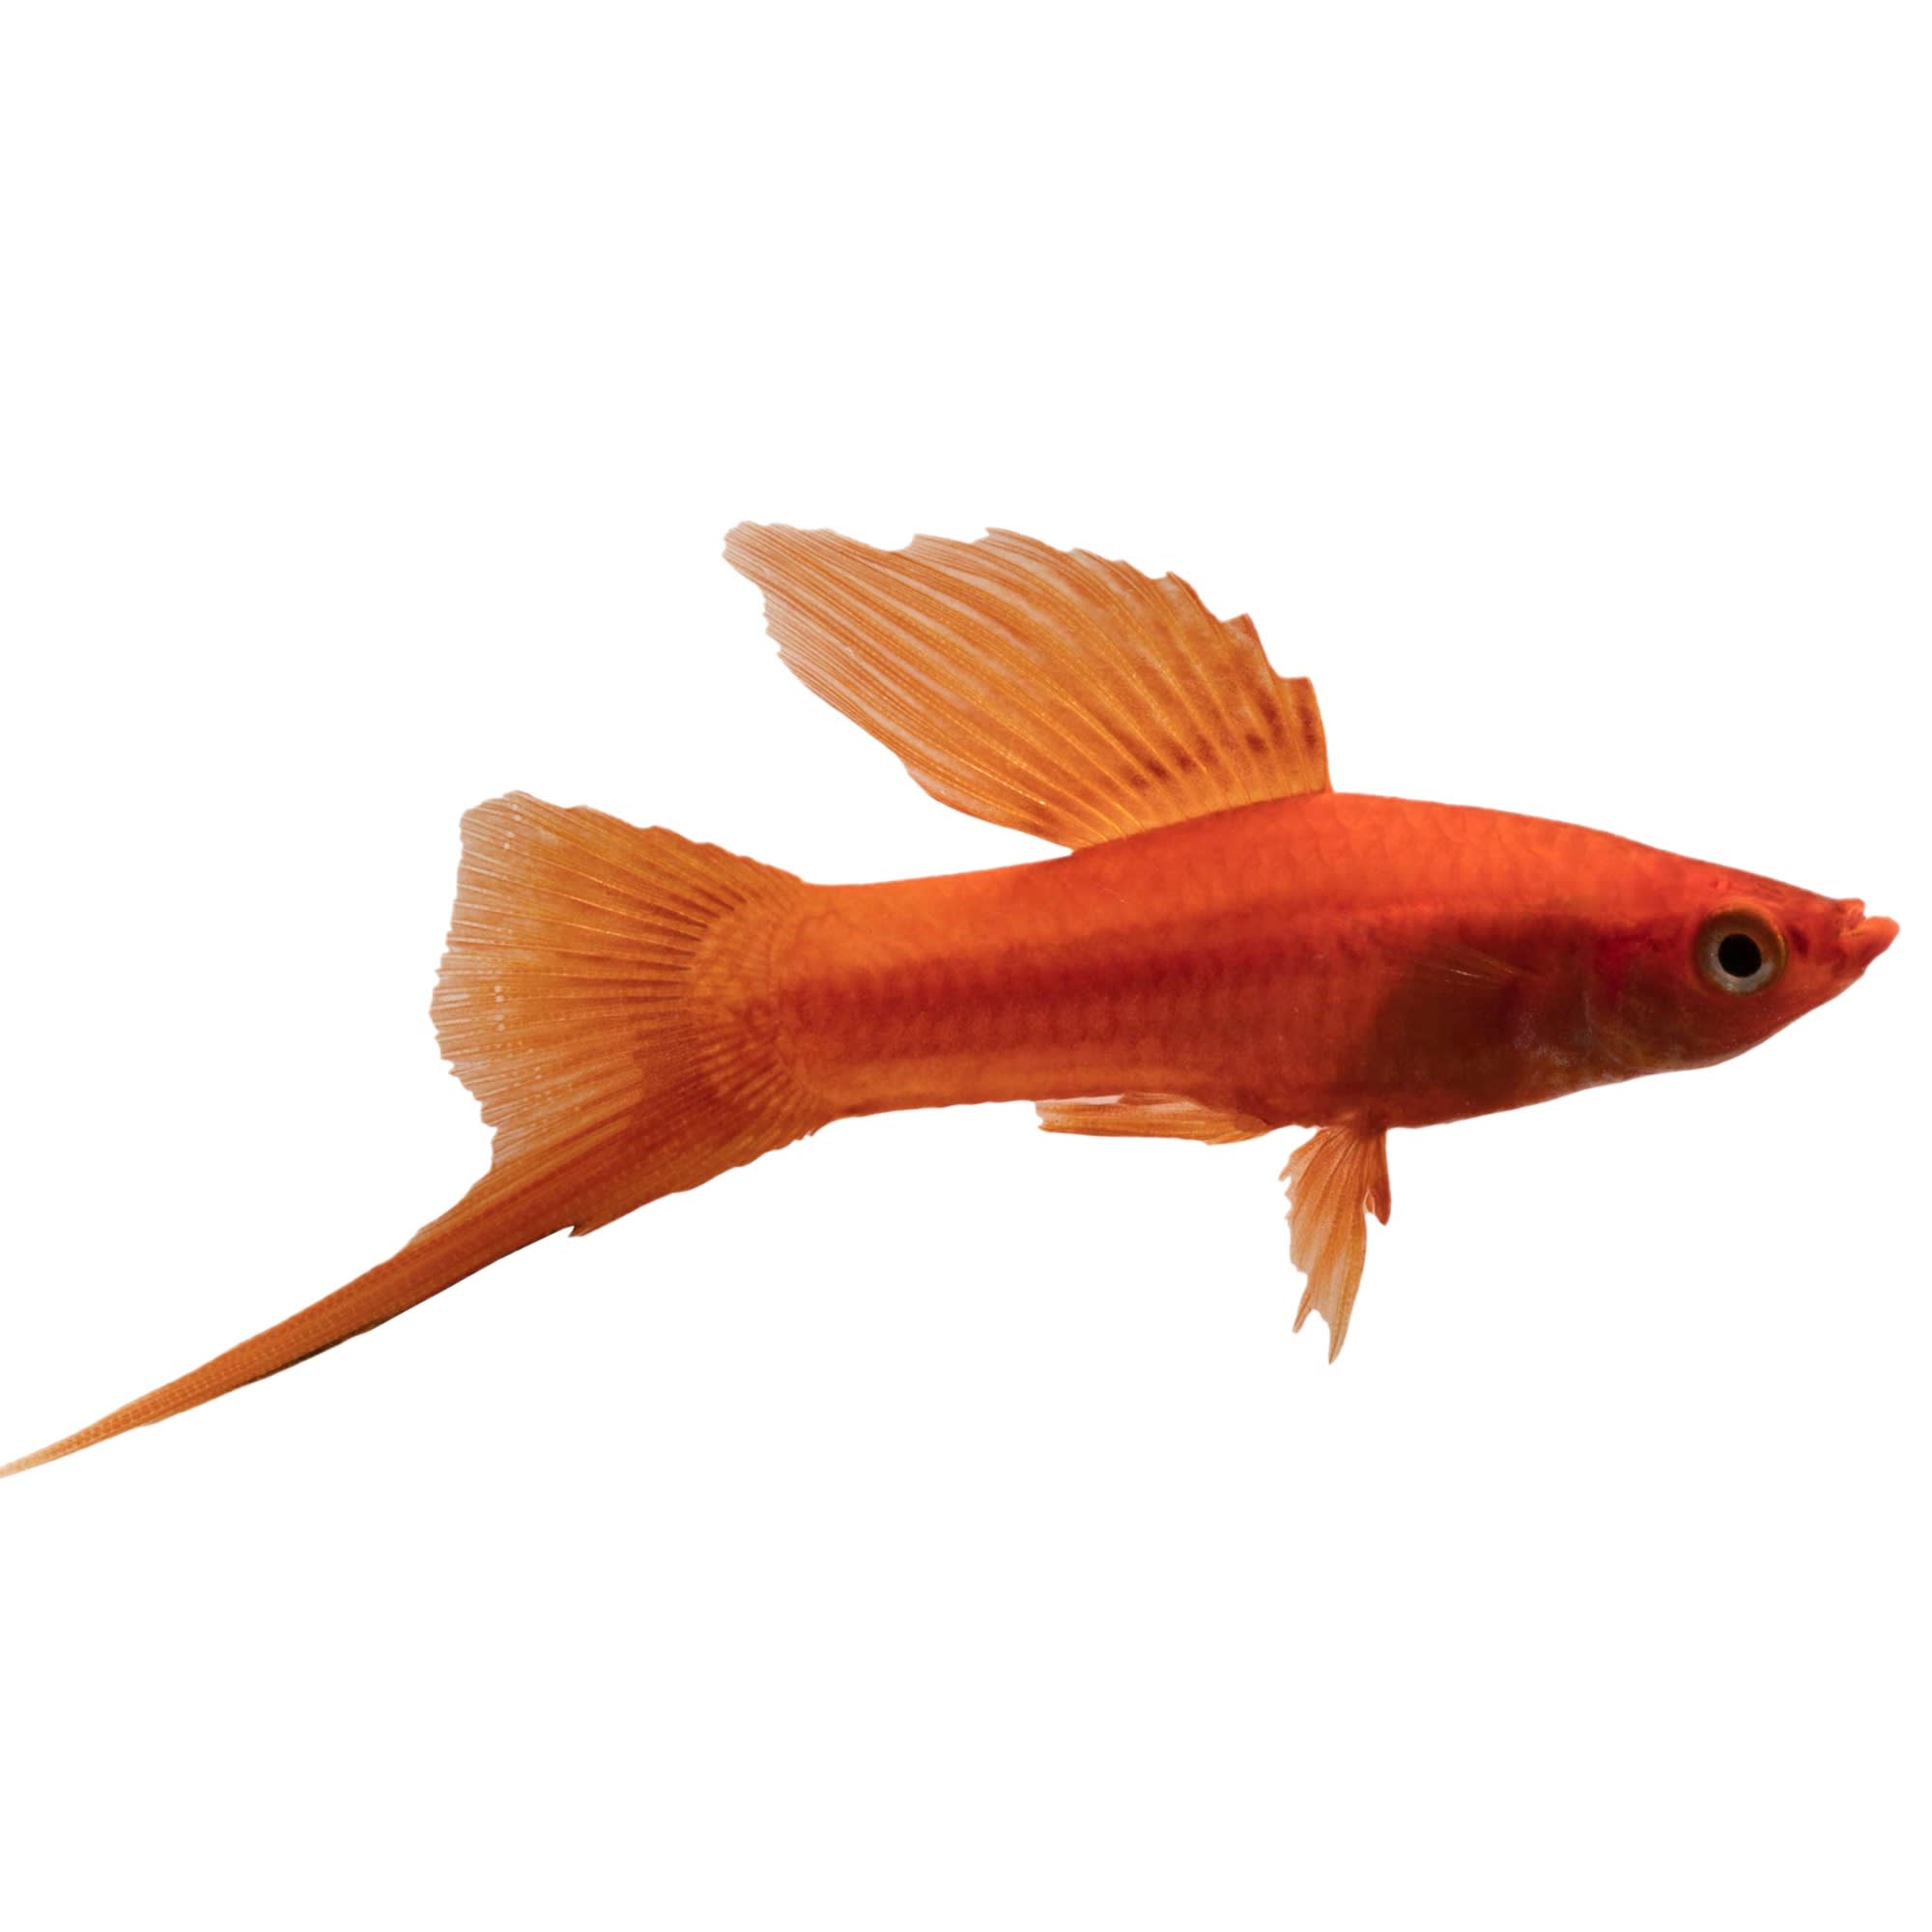 Red Swordtail Fish for Sale: Order Online